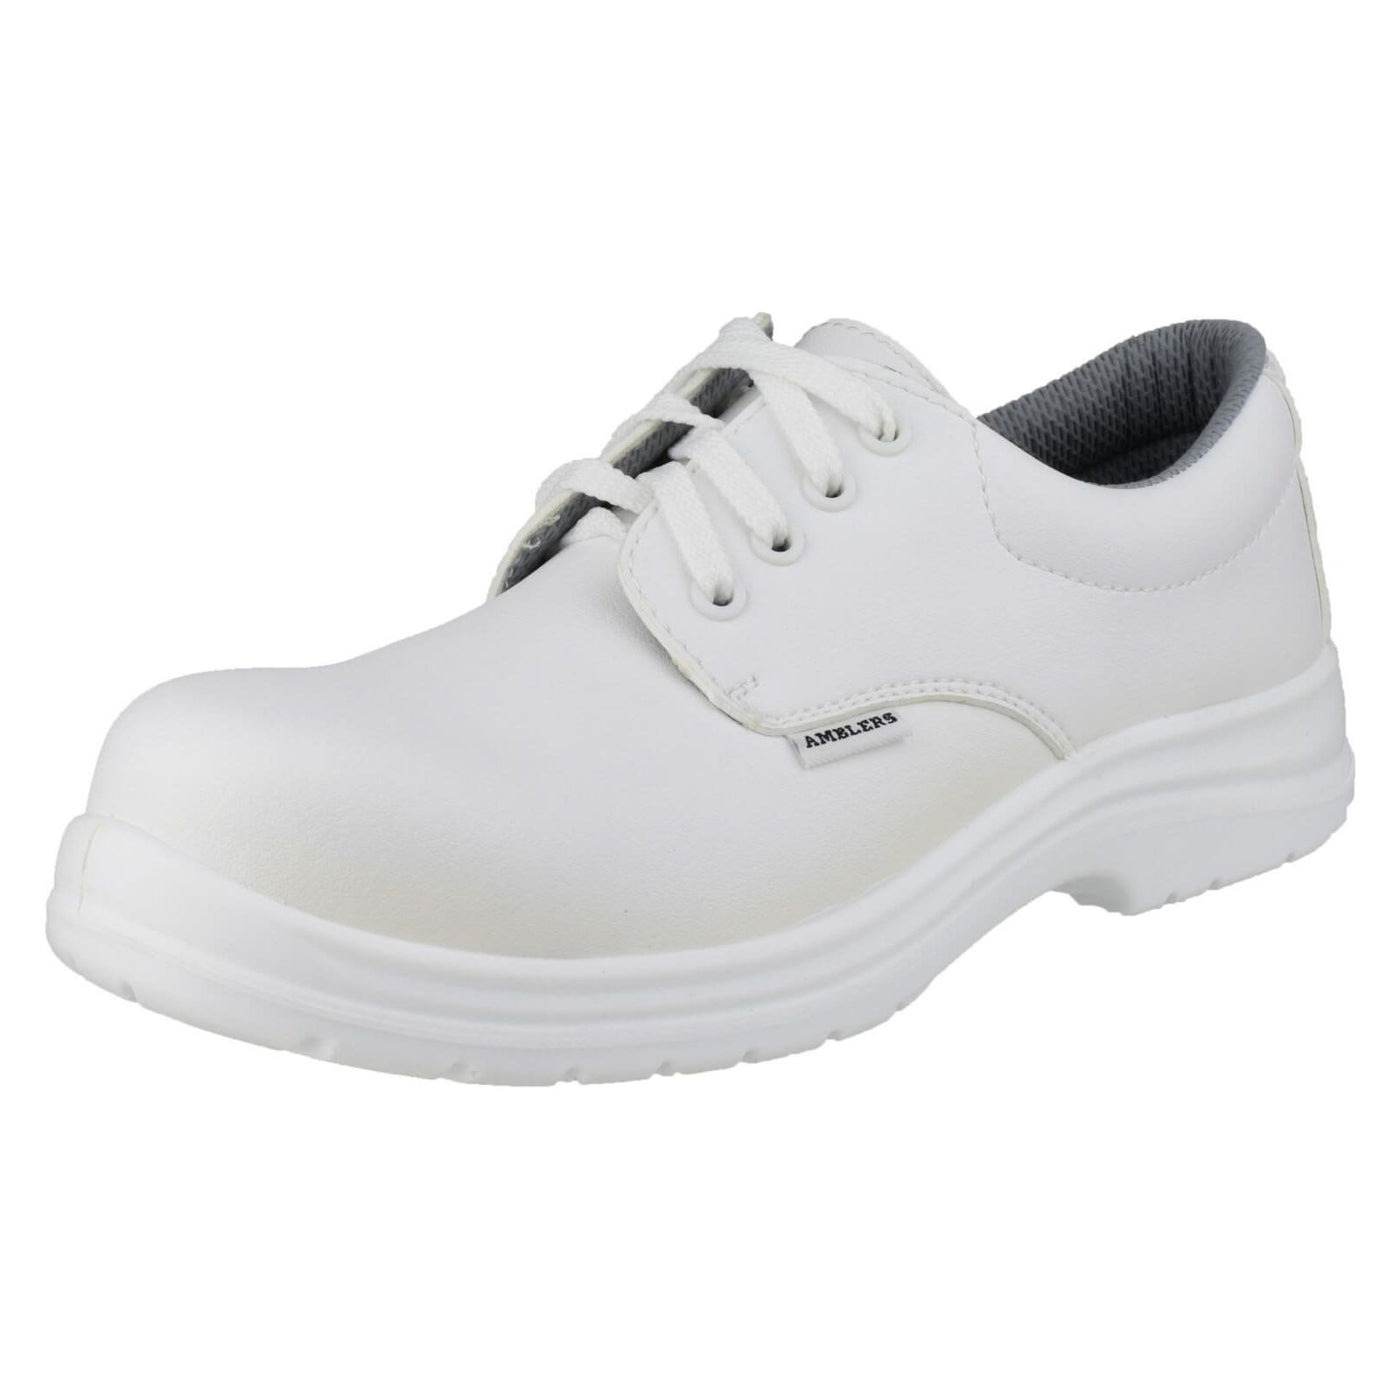 Amblers FS511 Metal-Free Safety Shoes-White-5